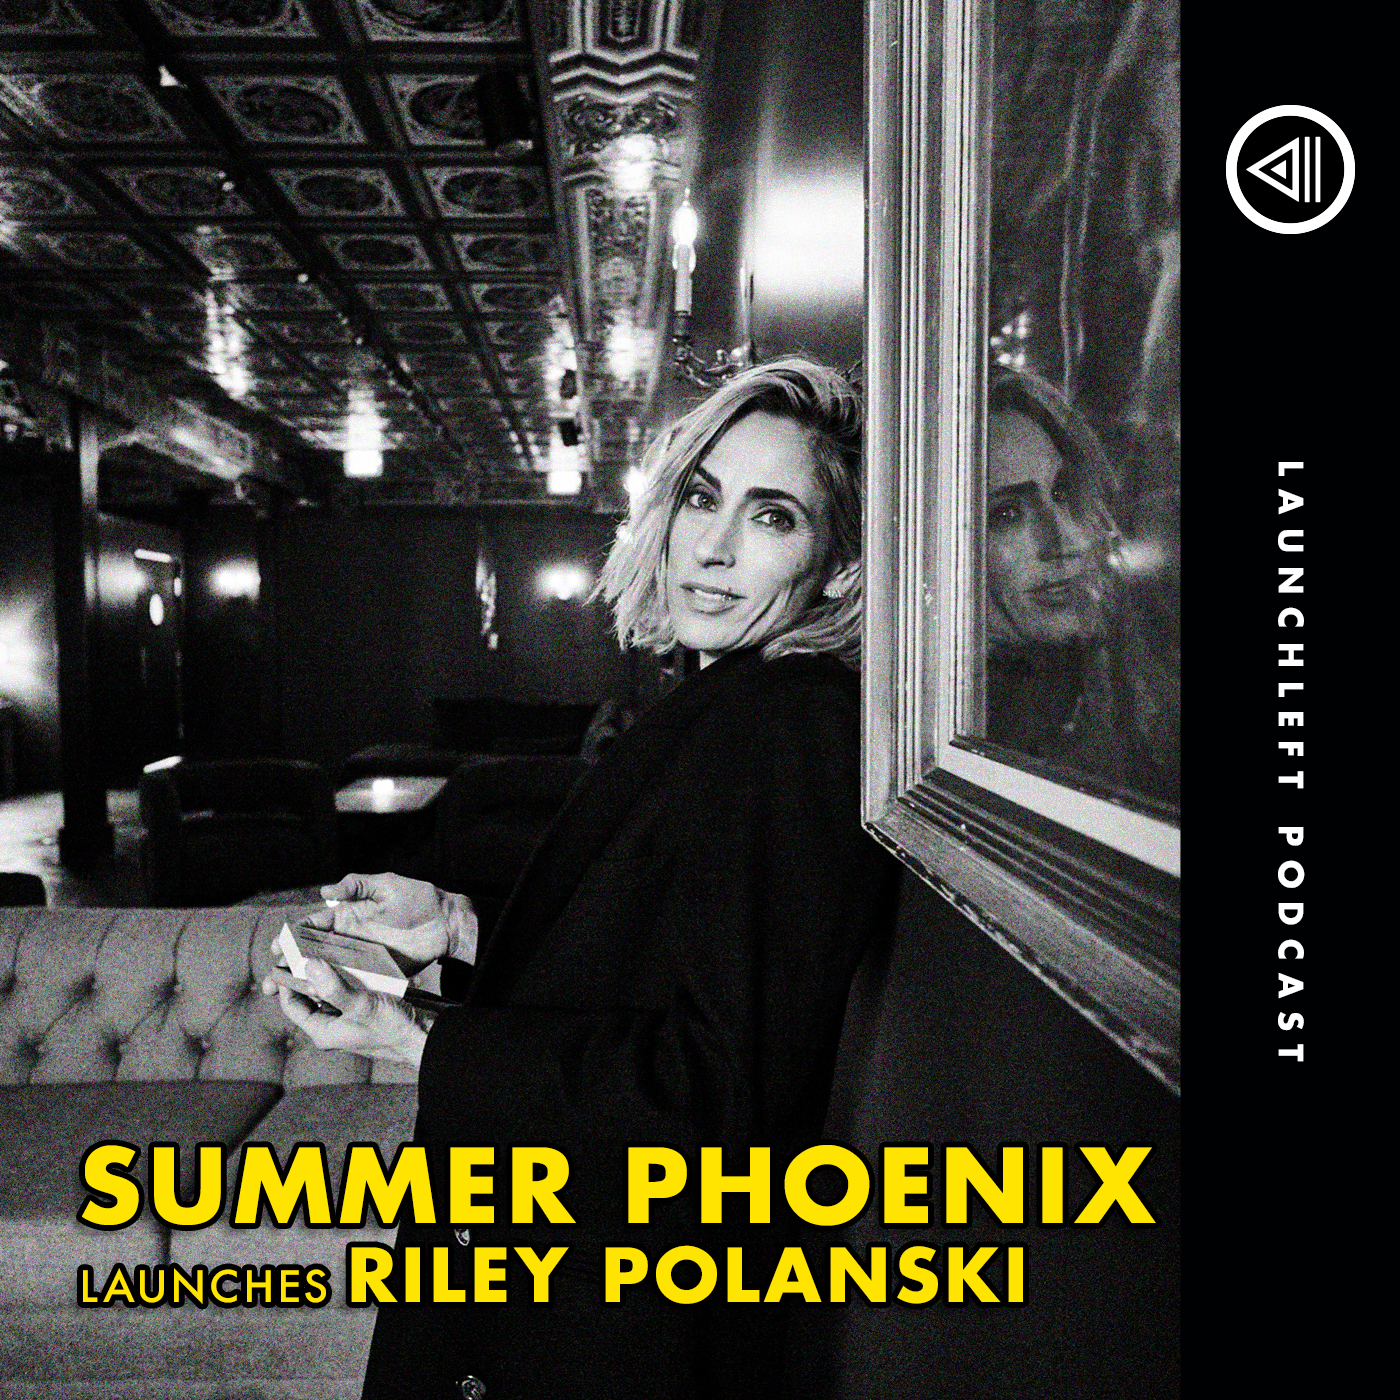 SUMMER PHOENIX launches Riley Polanski